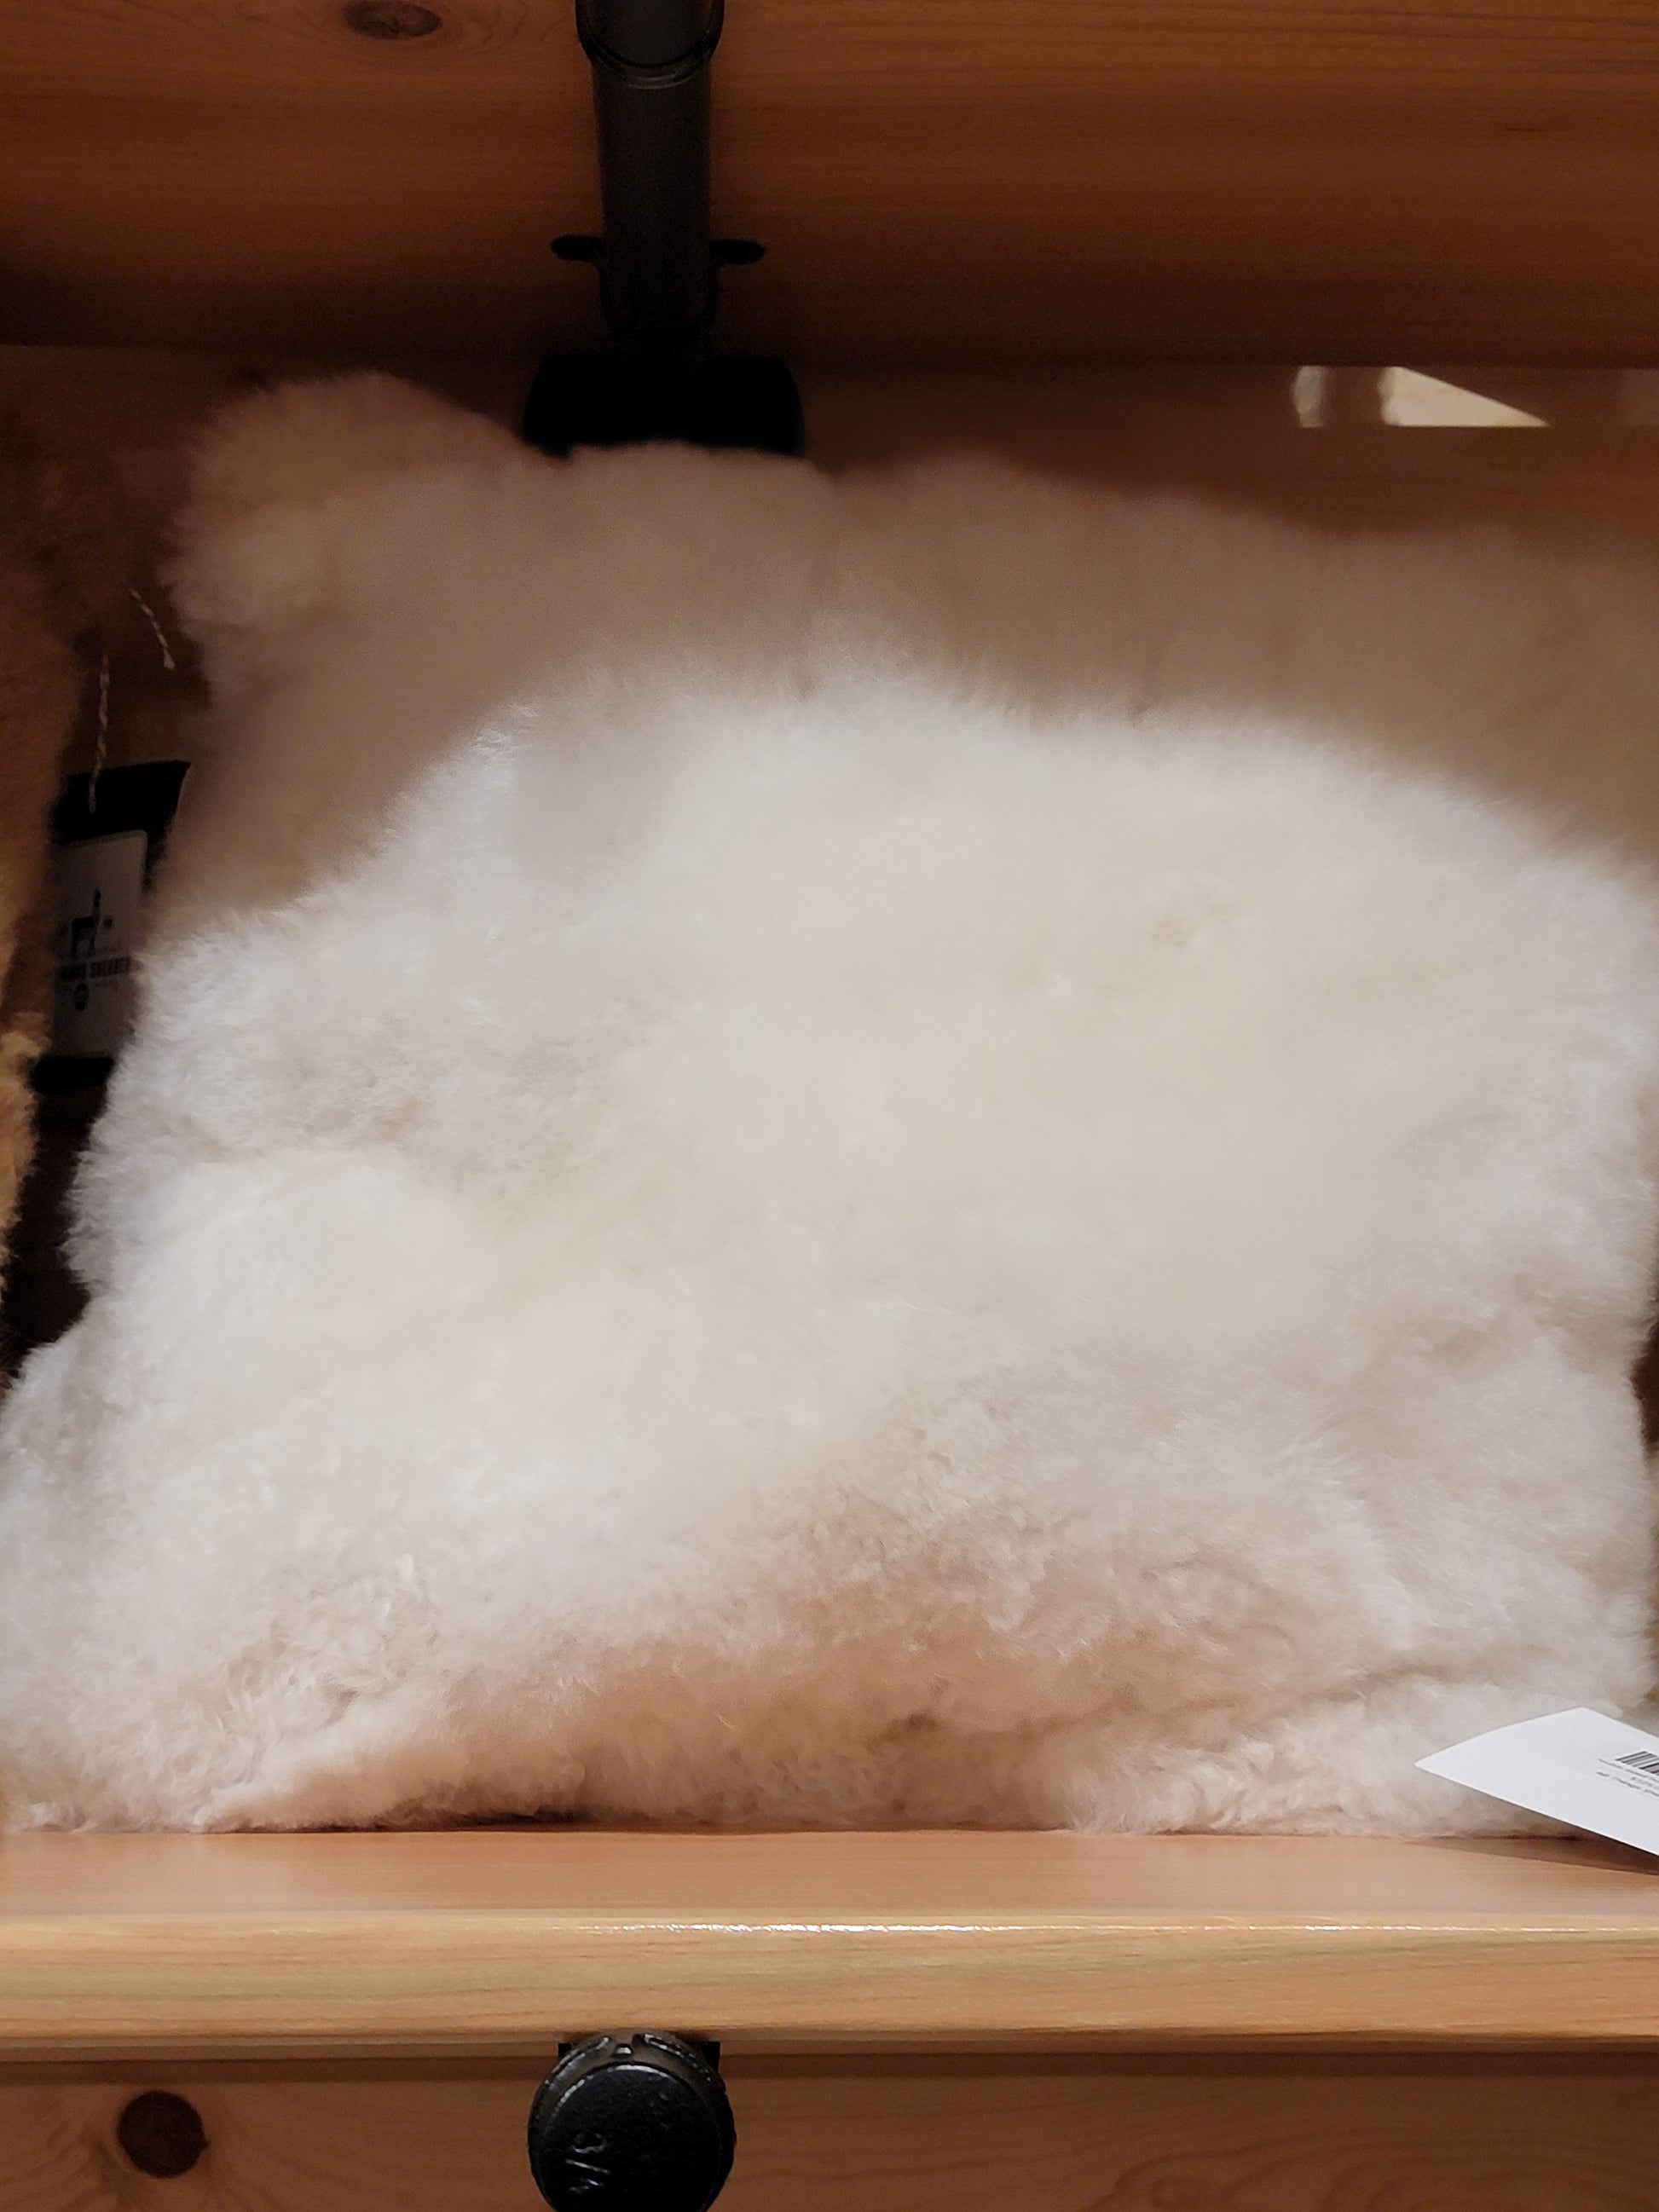 White fluffy pillow in a bin